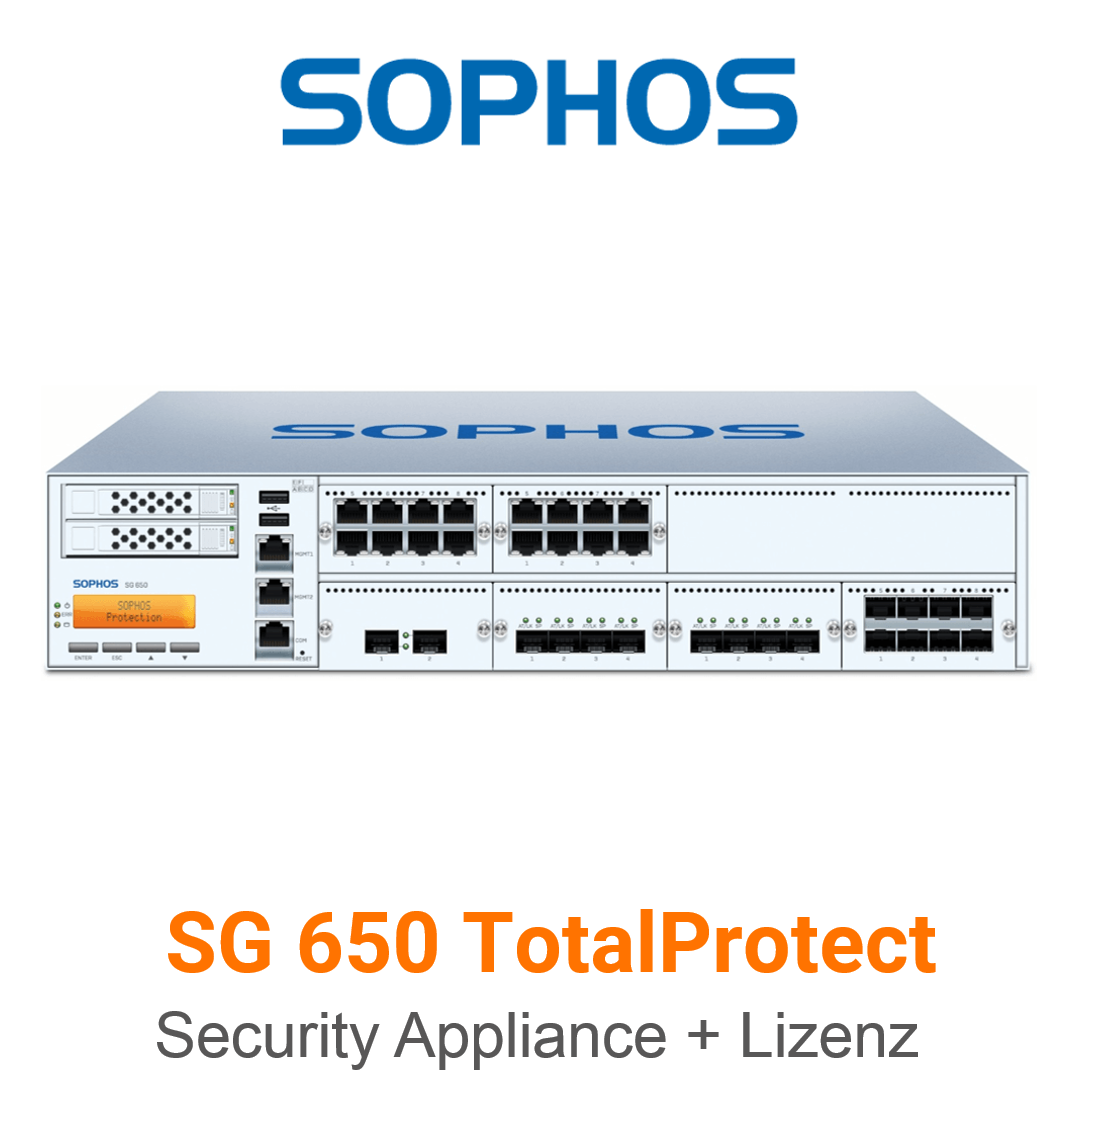 Sophos SG 650 TotalProtect Bundle (Hardware + Lizenz)